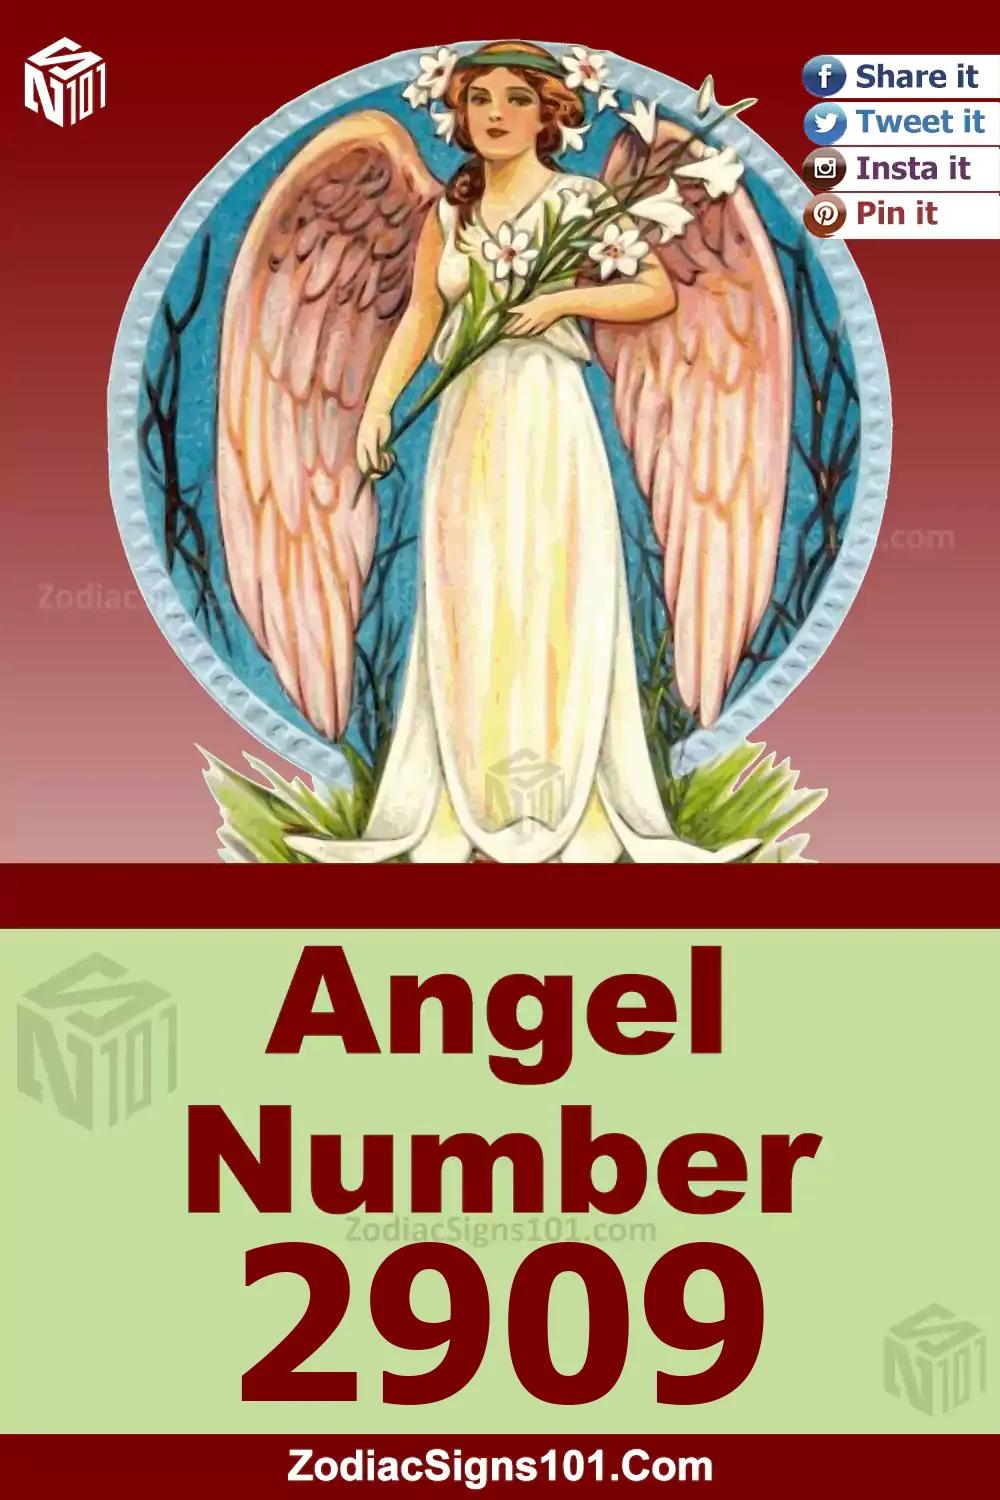 2909-Angel-Number-Meaning.jpg